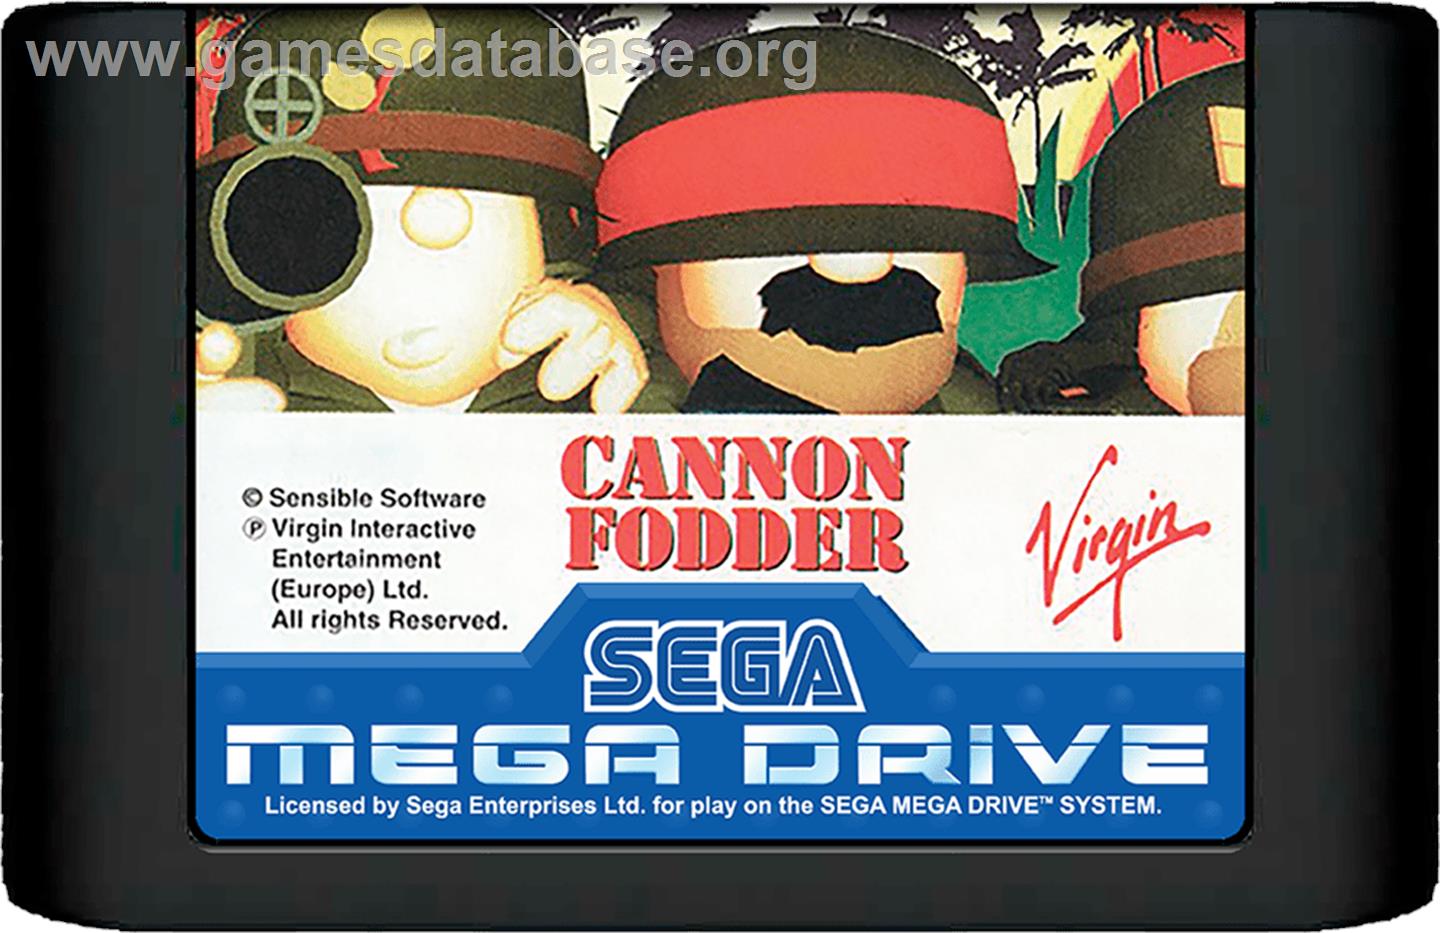 Cannon Fodder - Sega Genesis - Artwork - Cartridge